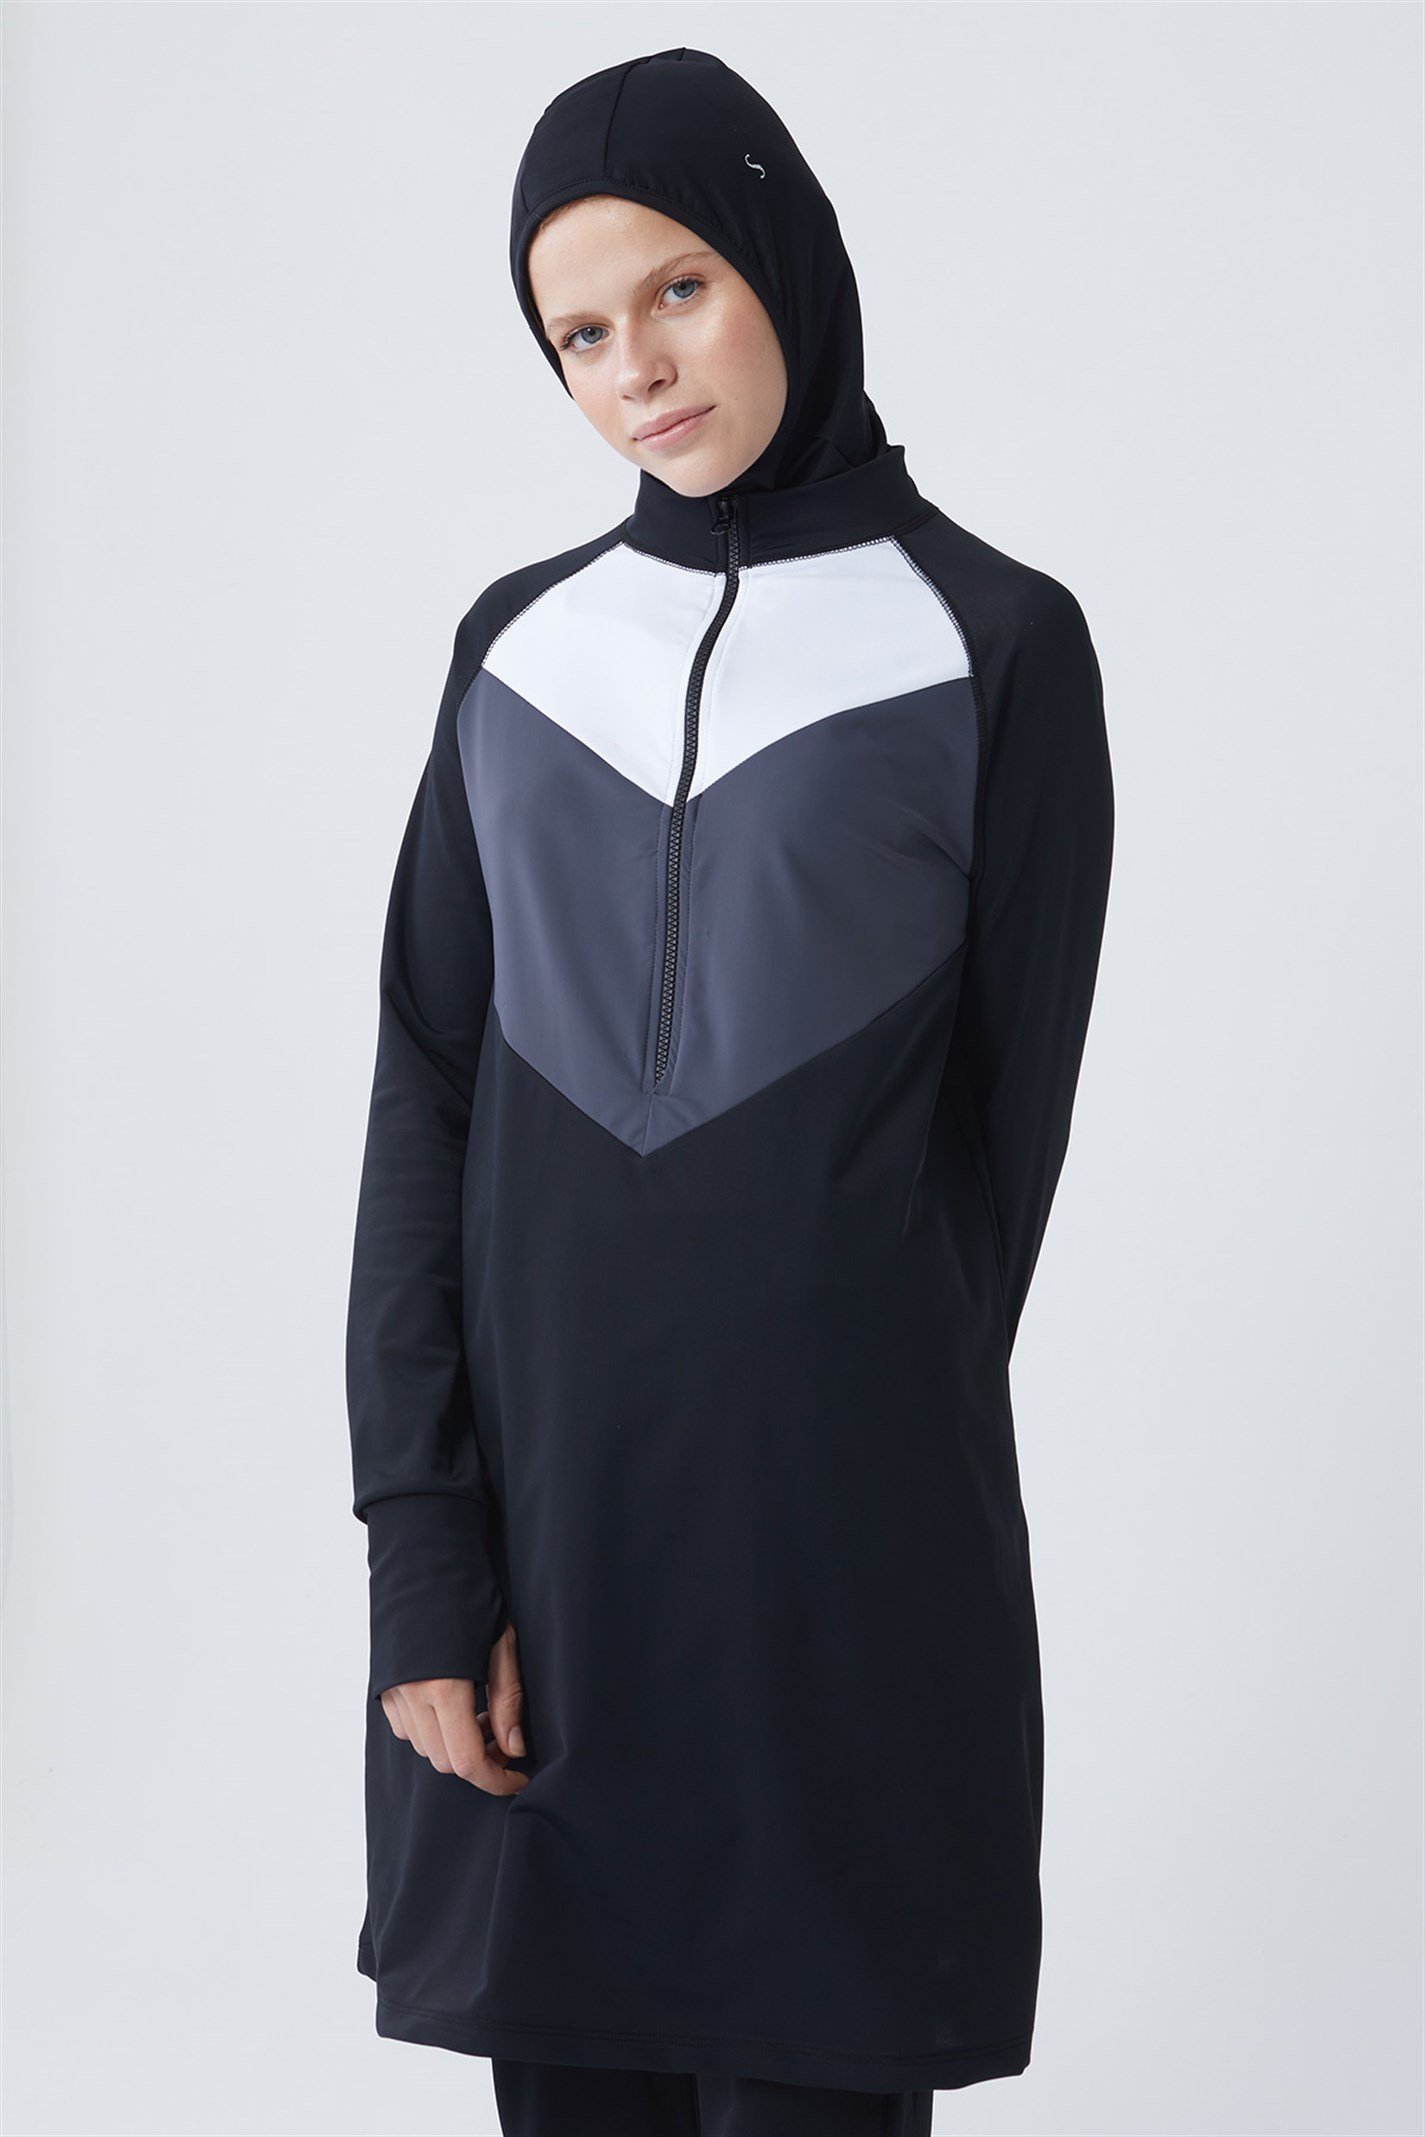 Colorful Elastane Hijab Swimsuit Tunic | Suud Collection